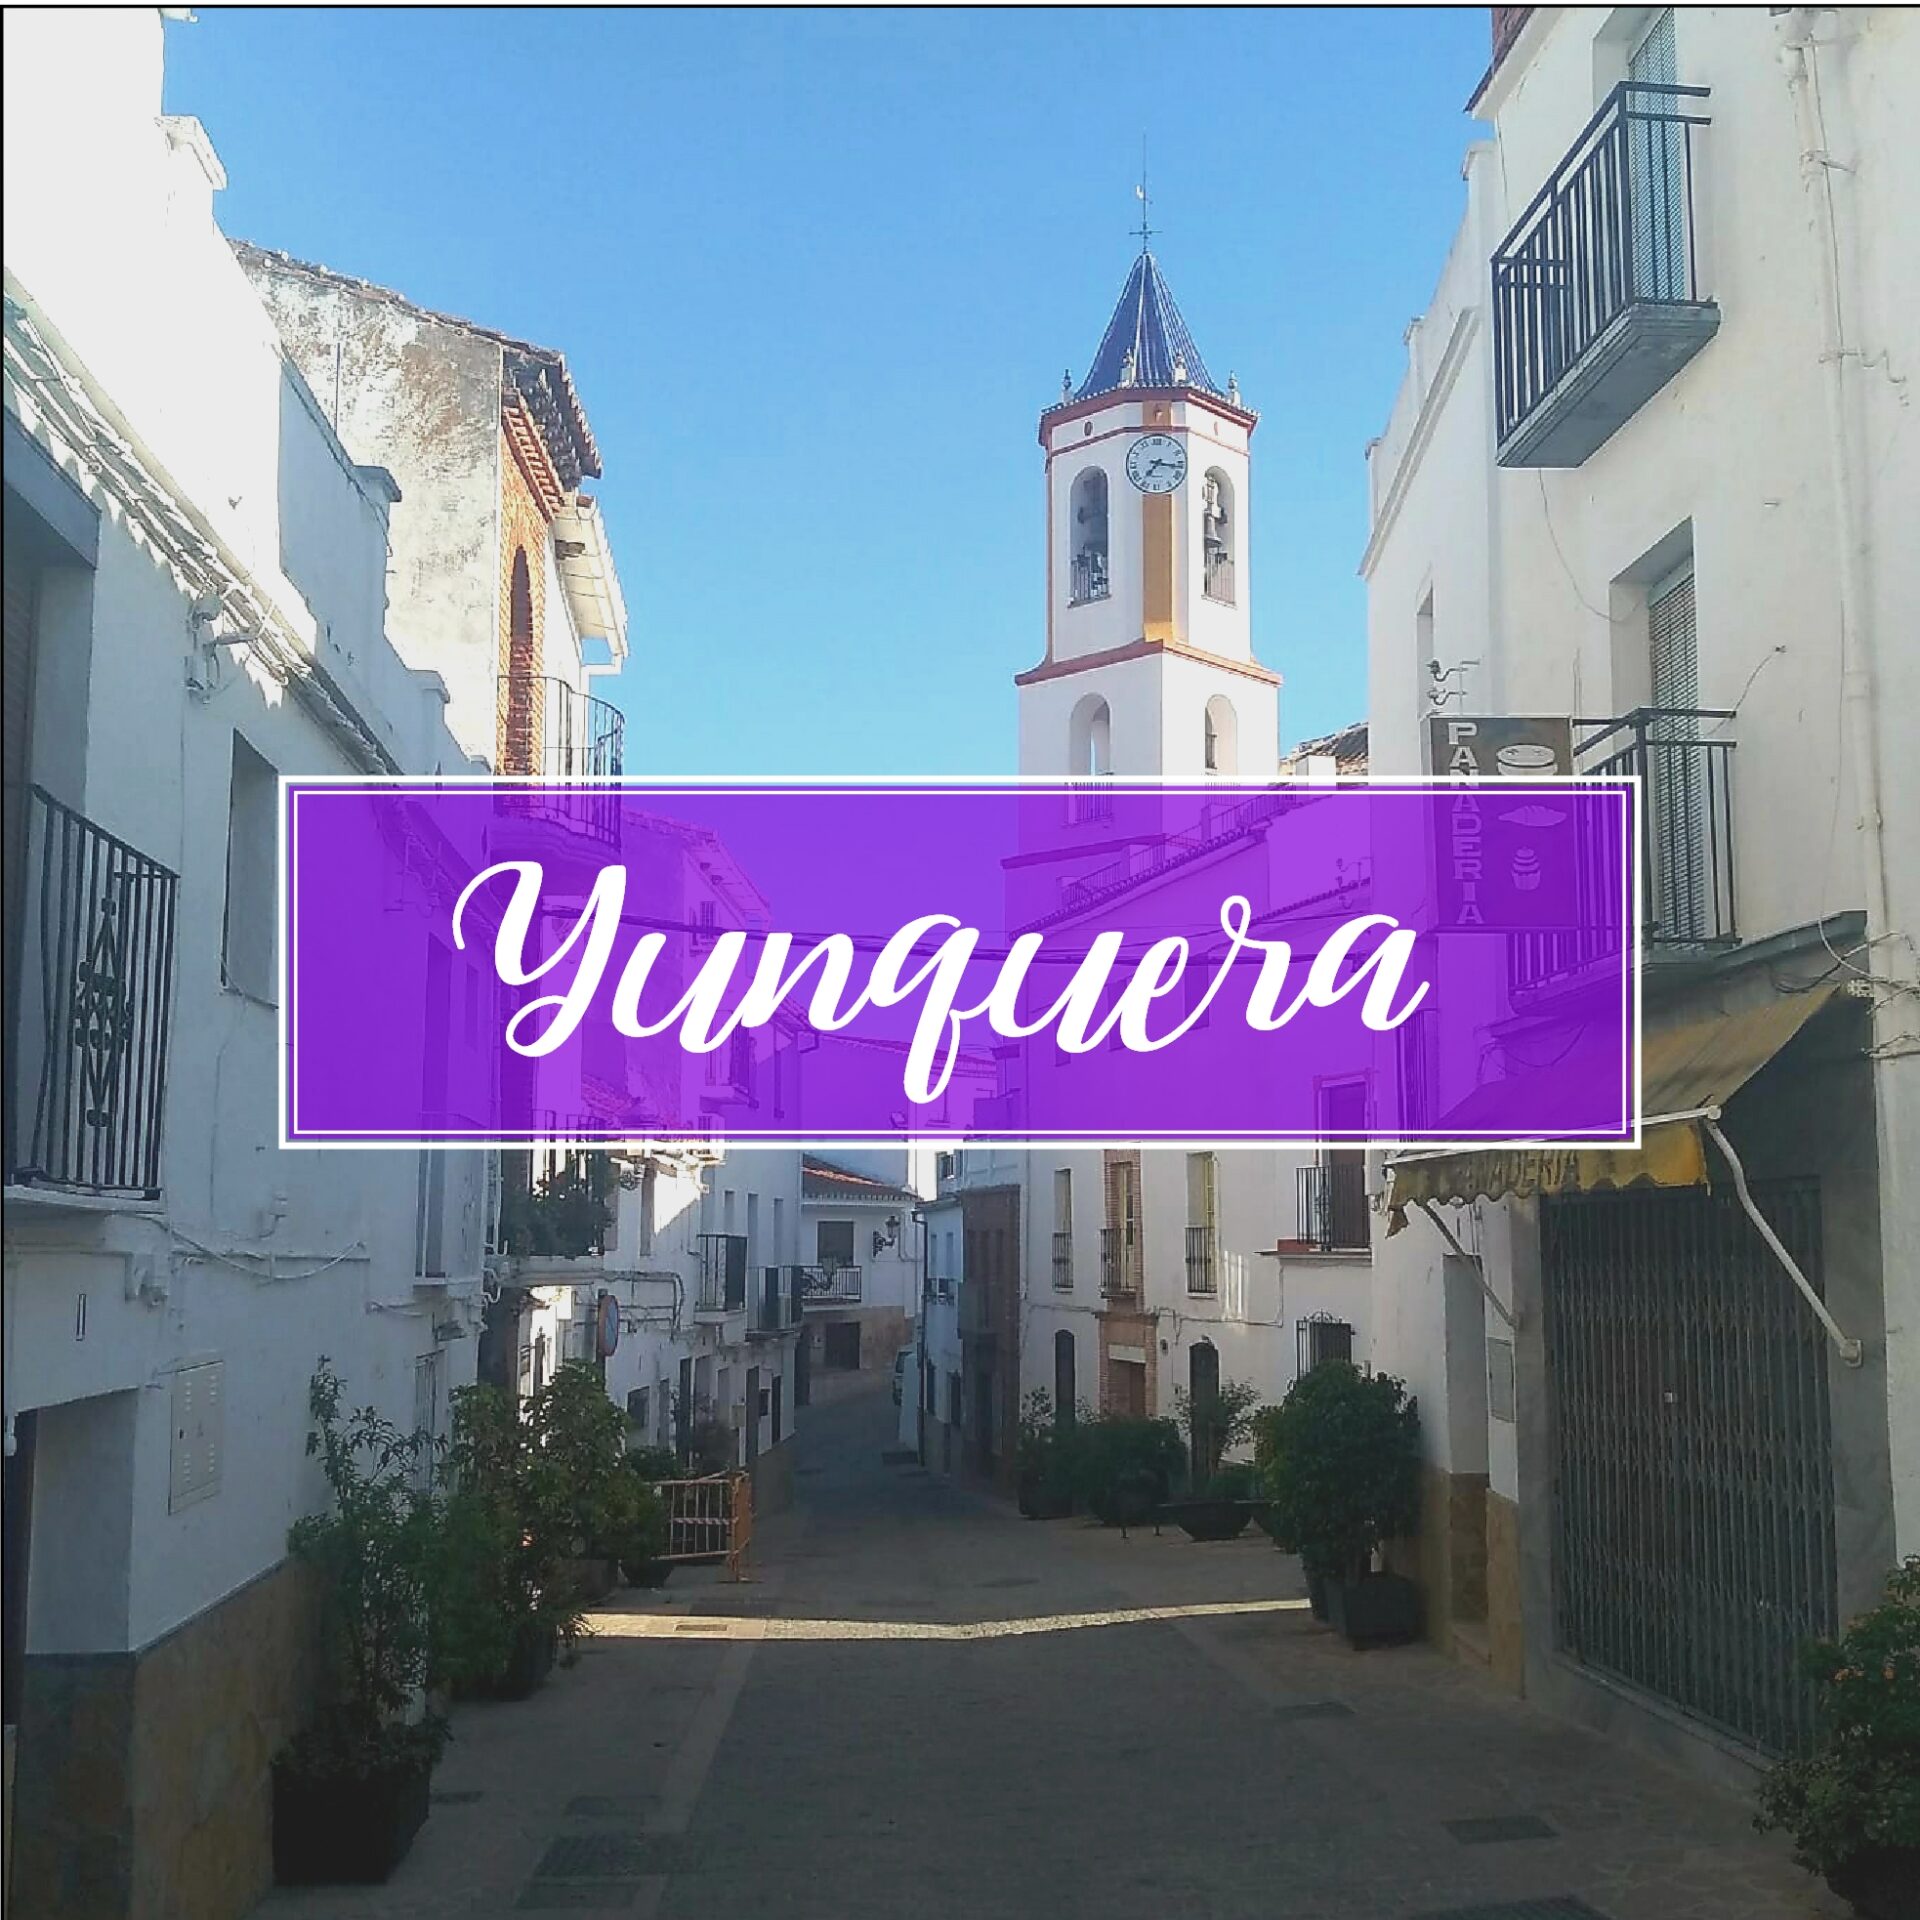 Yunquera Town Village Malaga